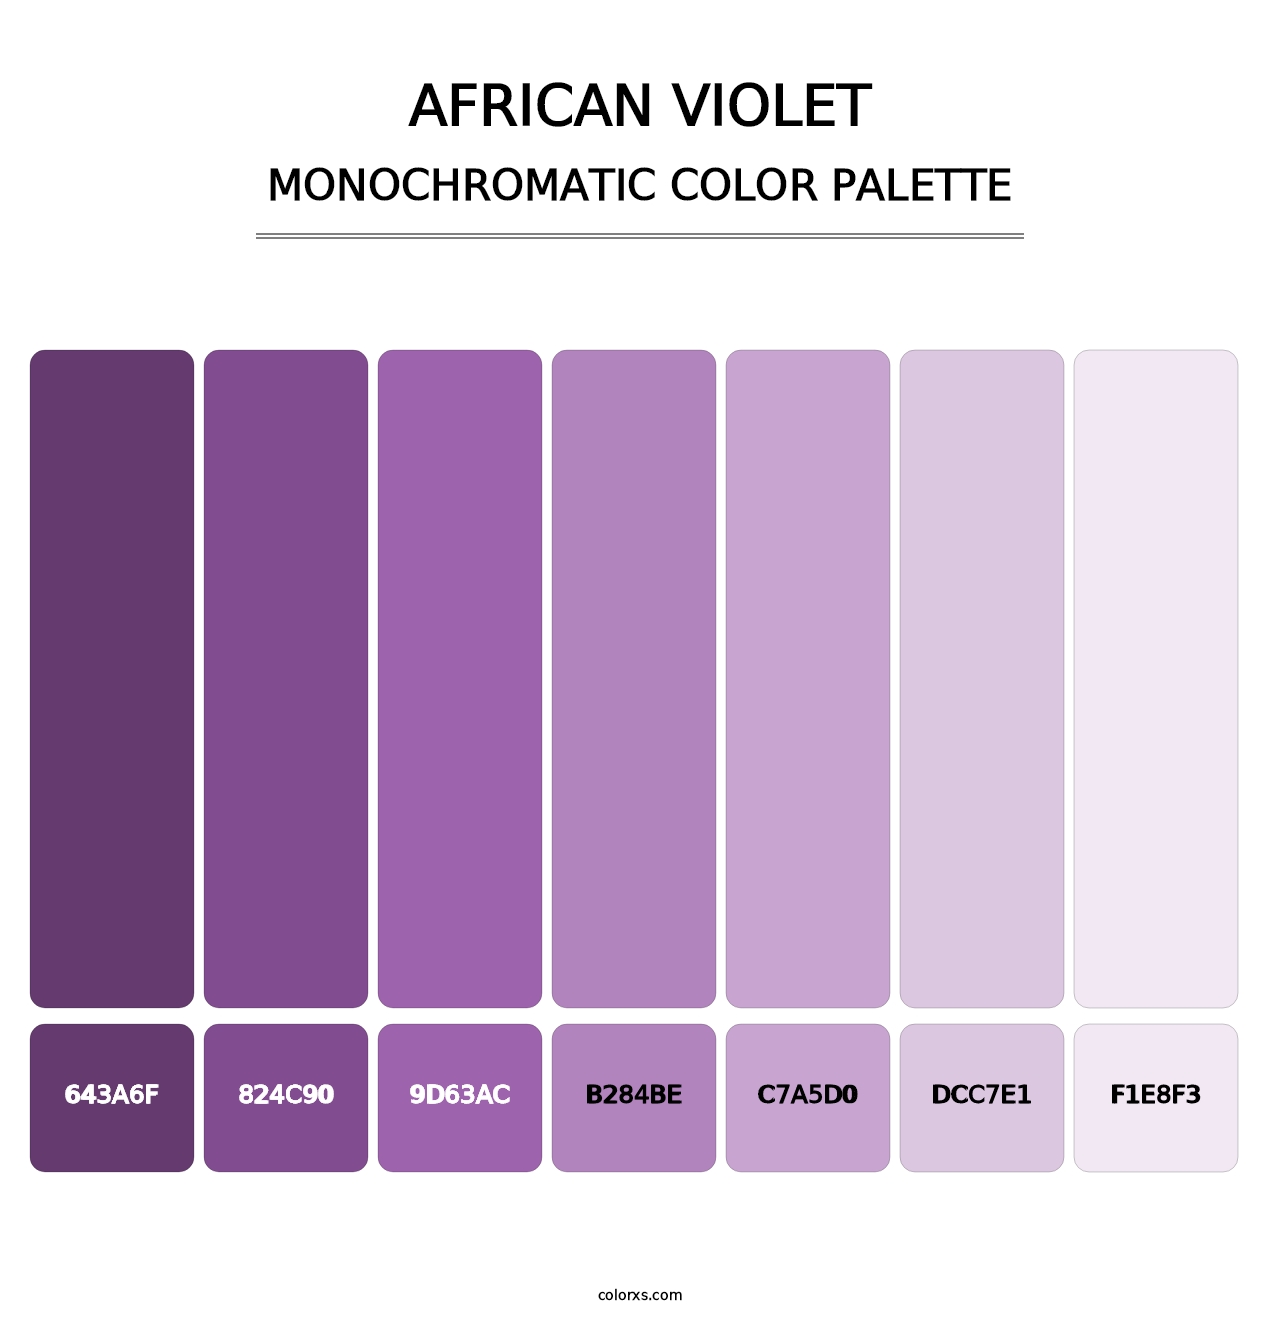 African Violet - Monochromatic Color Palette